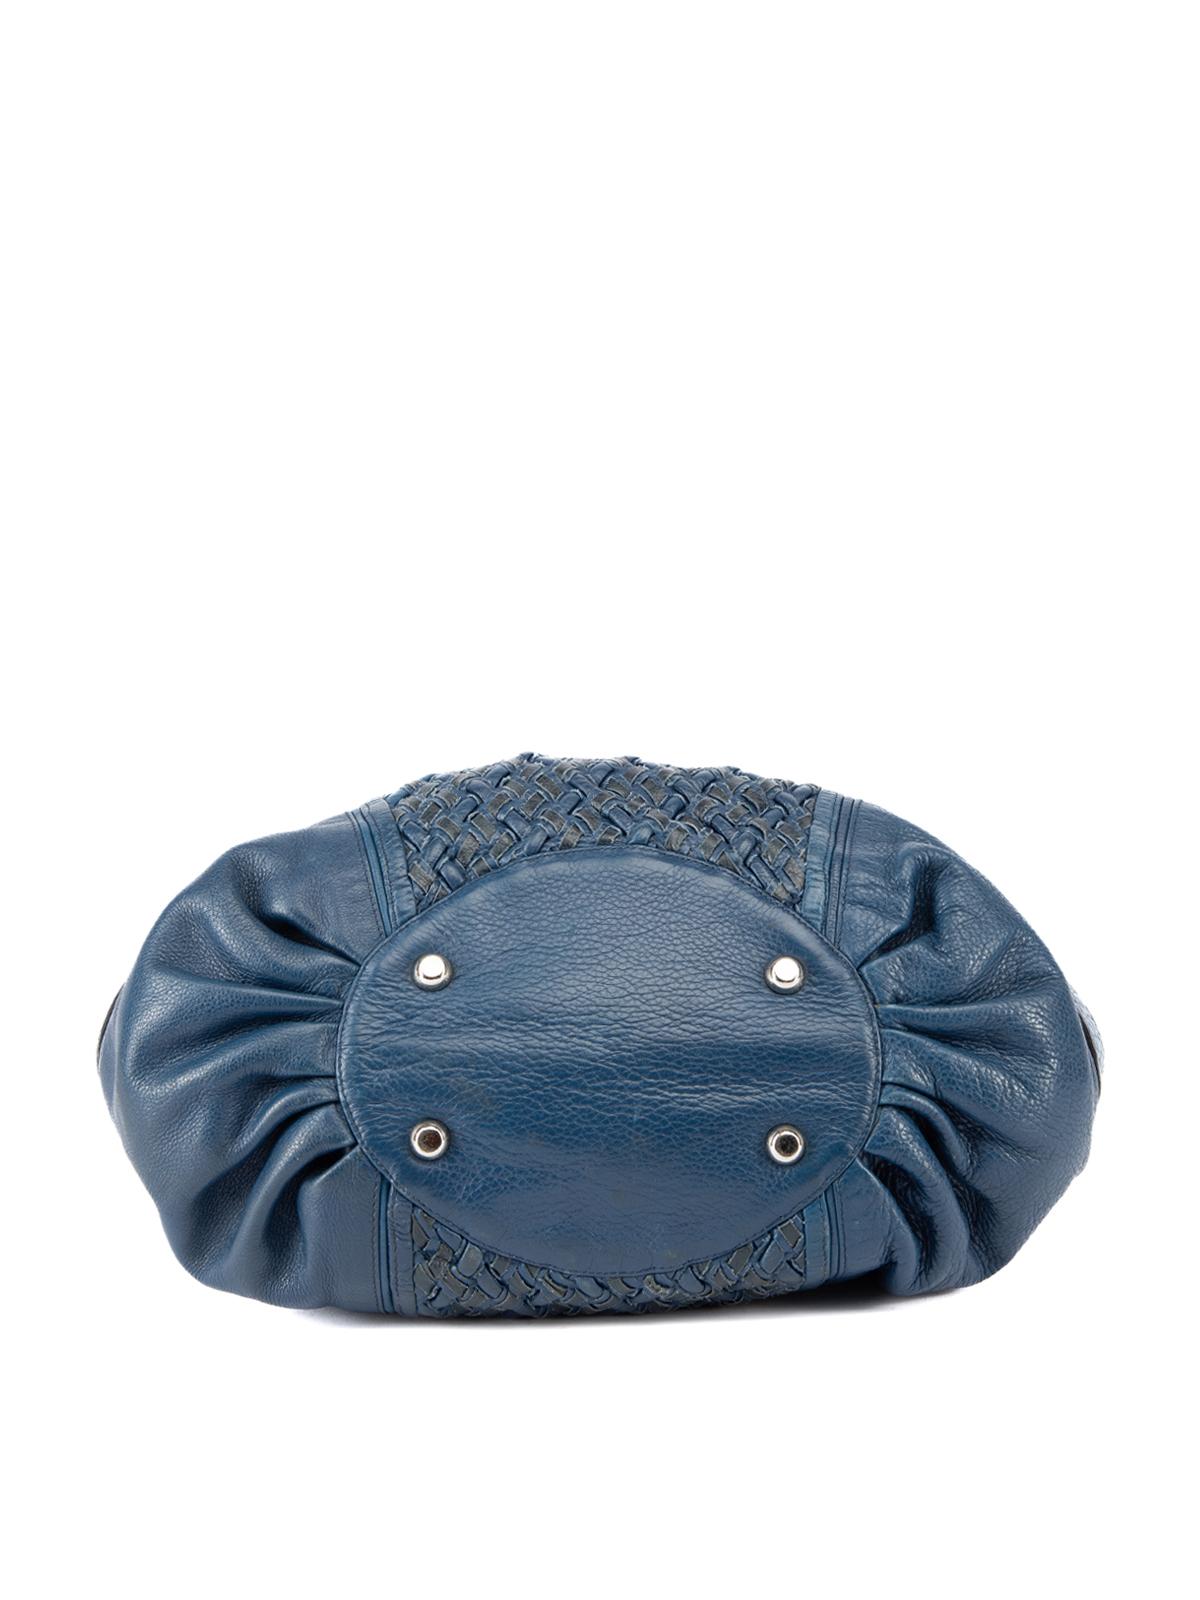 Pre-Loved Zac Posen Women's Blue Leather Woven Shoulder Bag 1